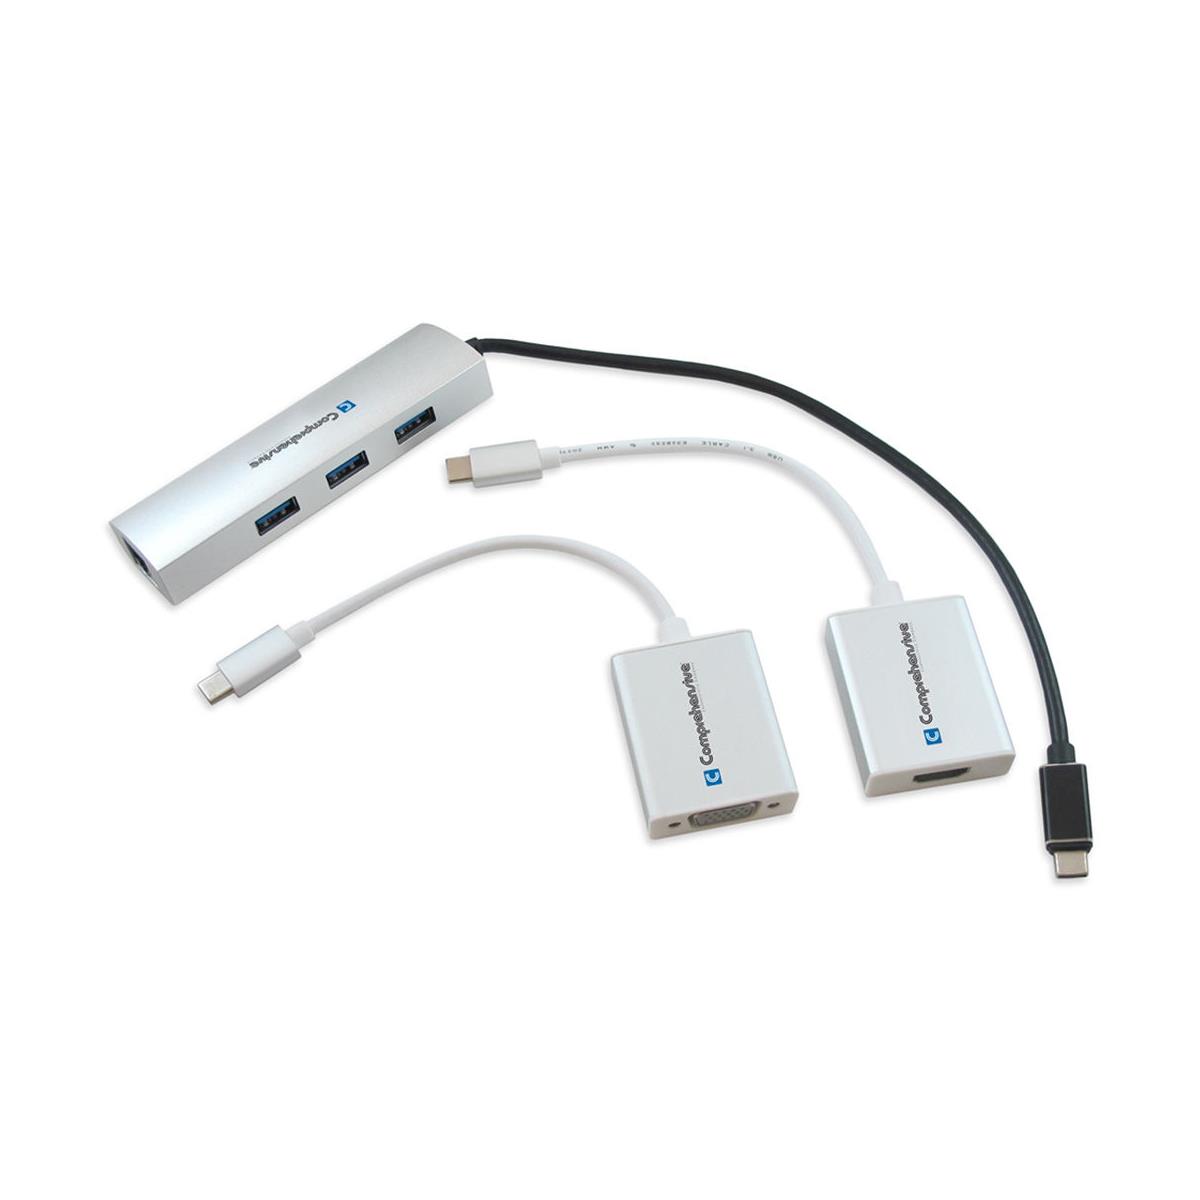 Image of Comprehensive USB 3.1 Type-C Essentials Kit